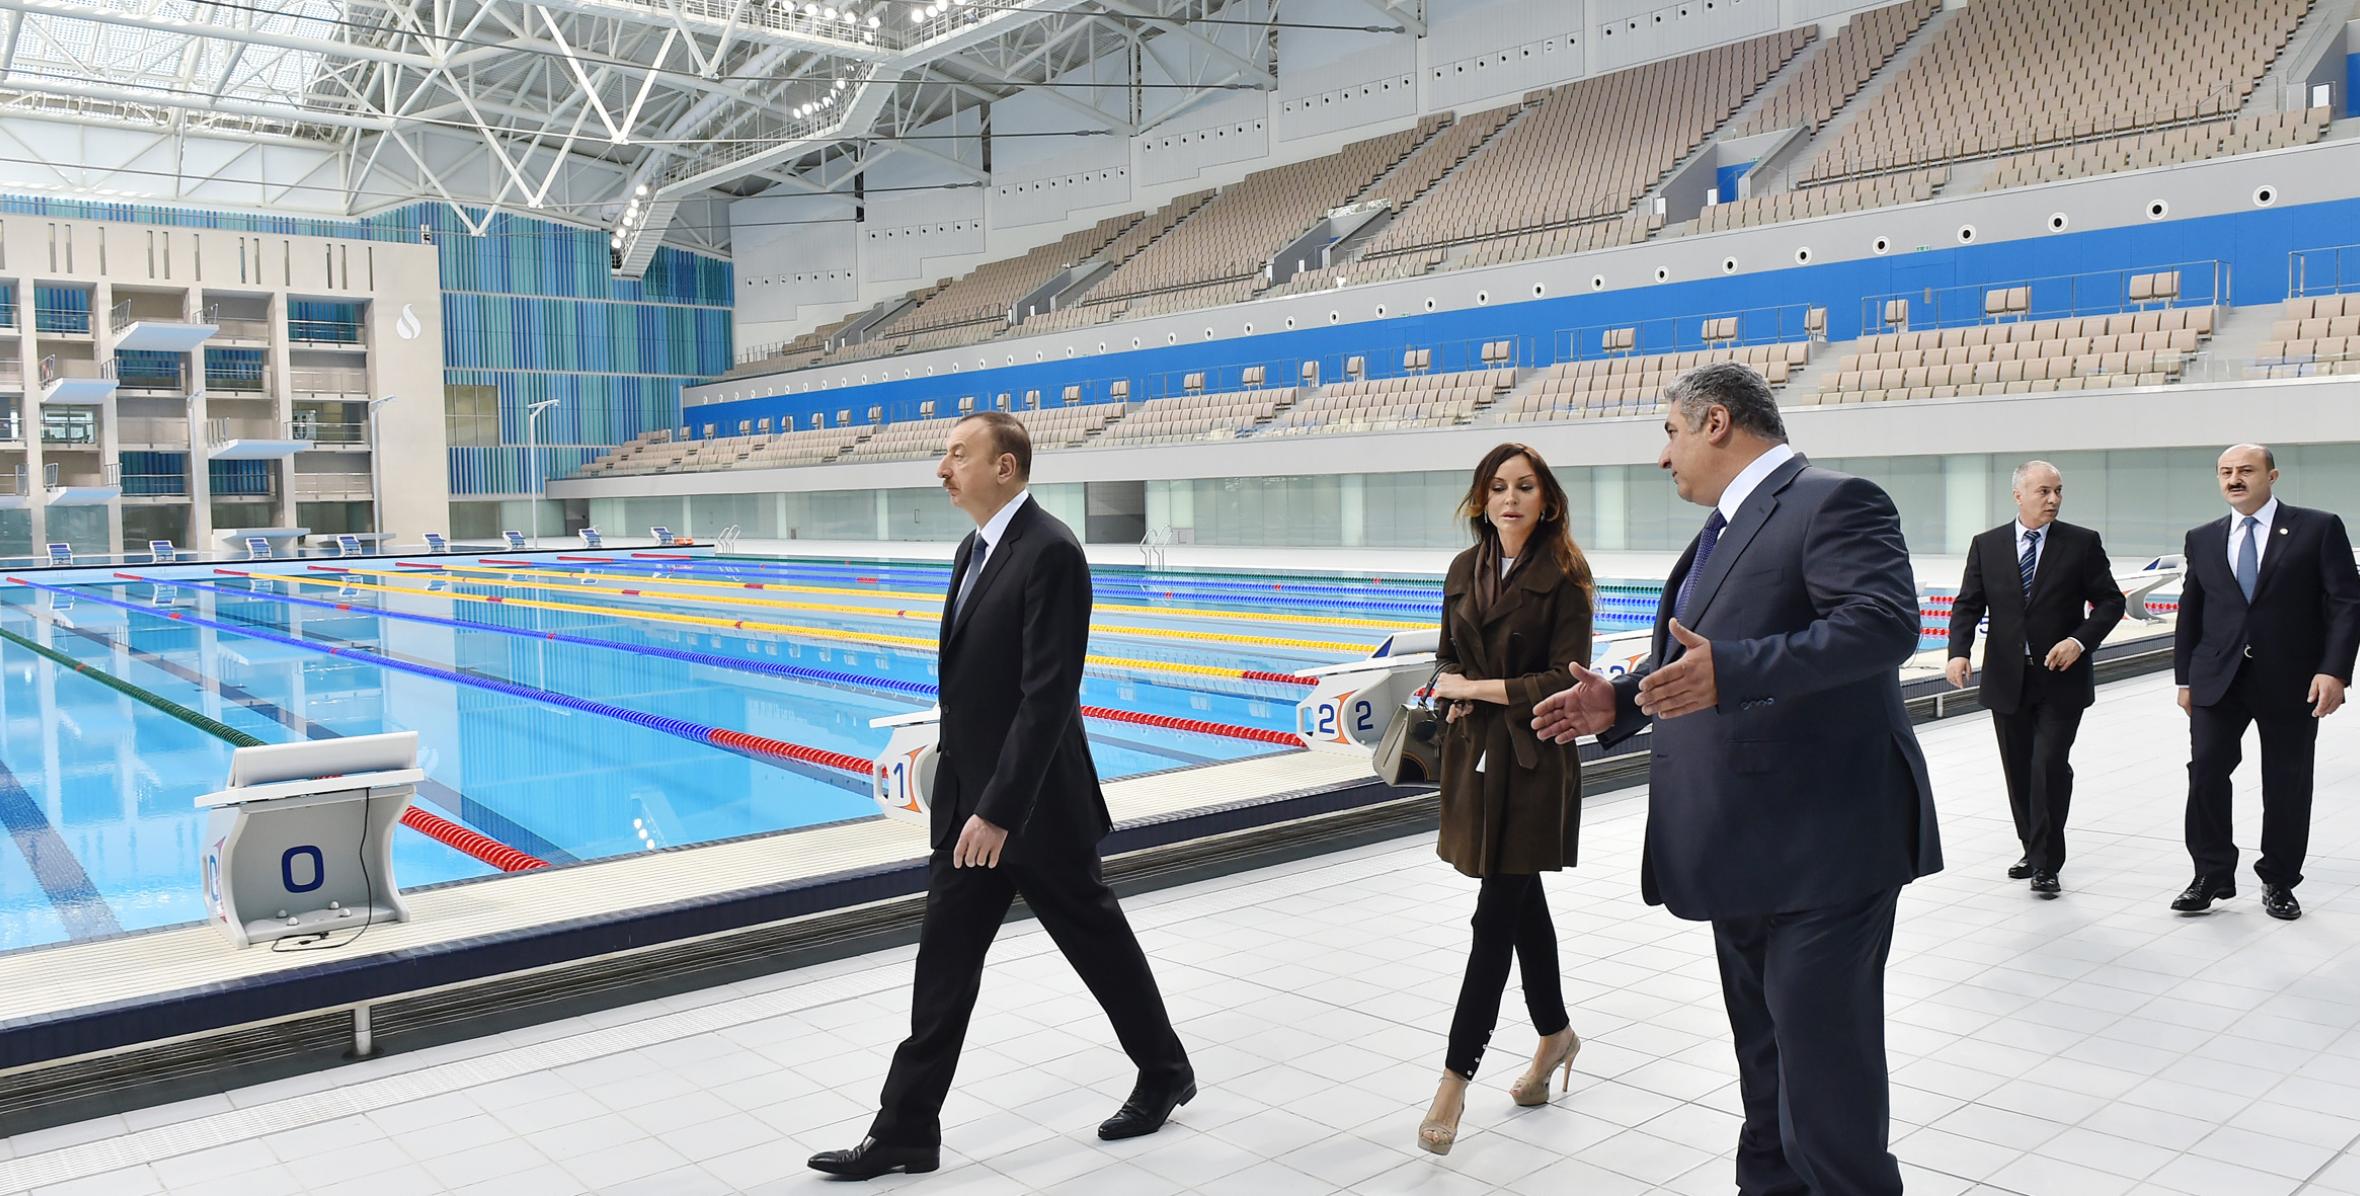 Ilham Aliyev inaugurated the Aquatic Palace in Baku